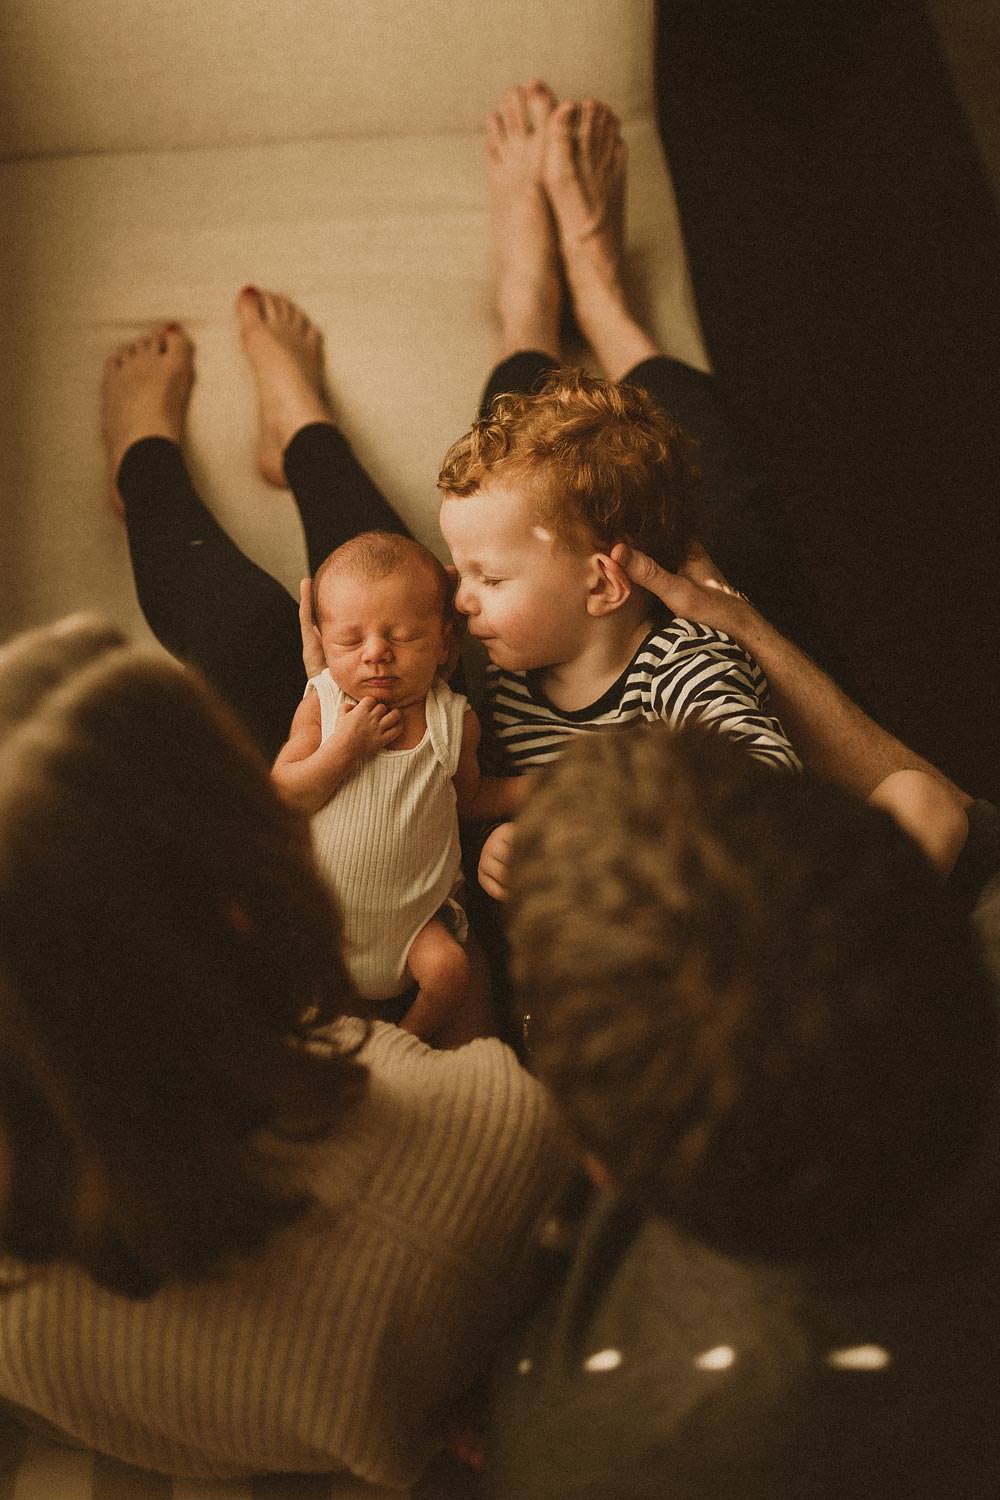 Newborn-sibling-photography-sydney-big-brother-smells-newborn